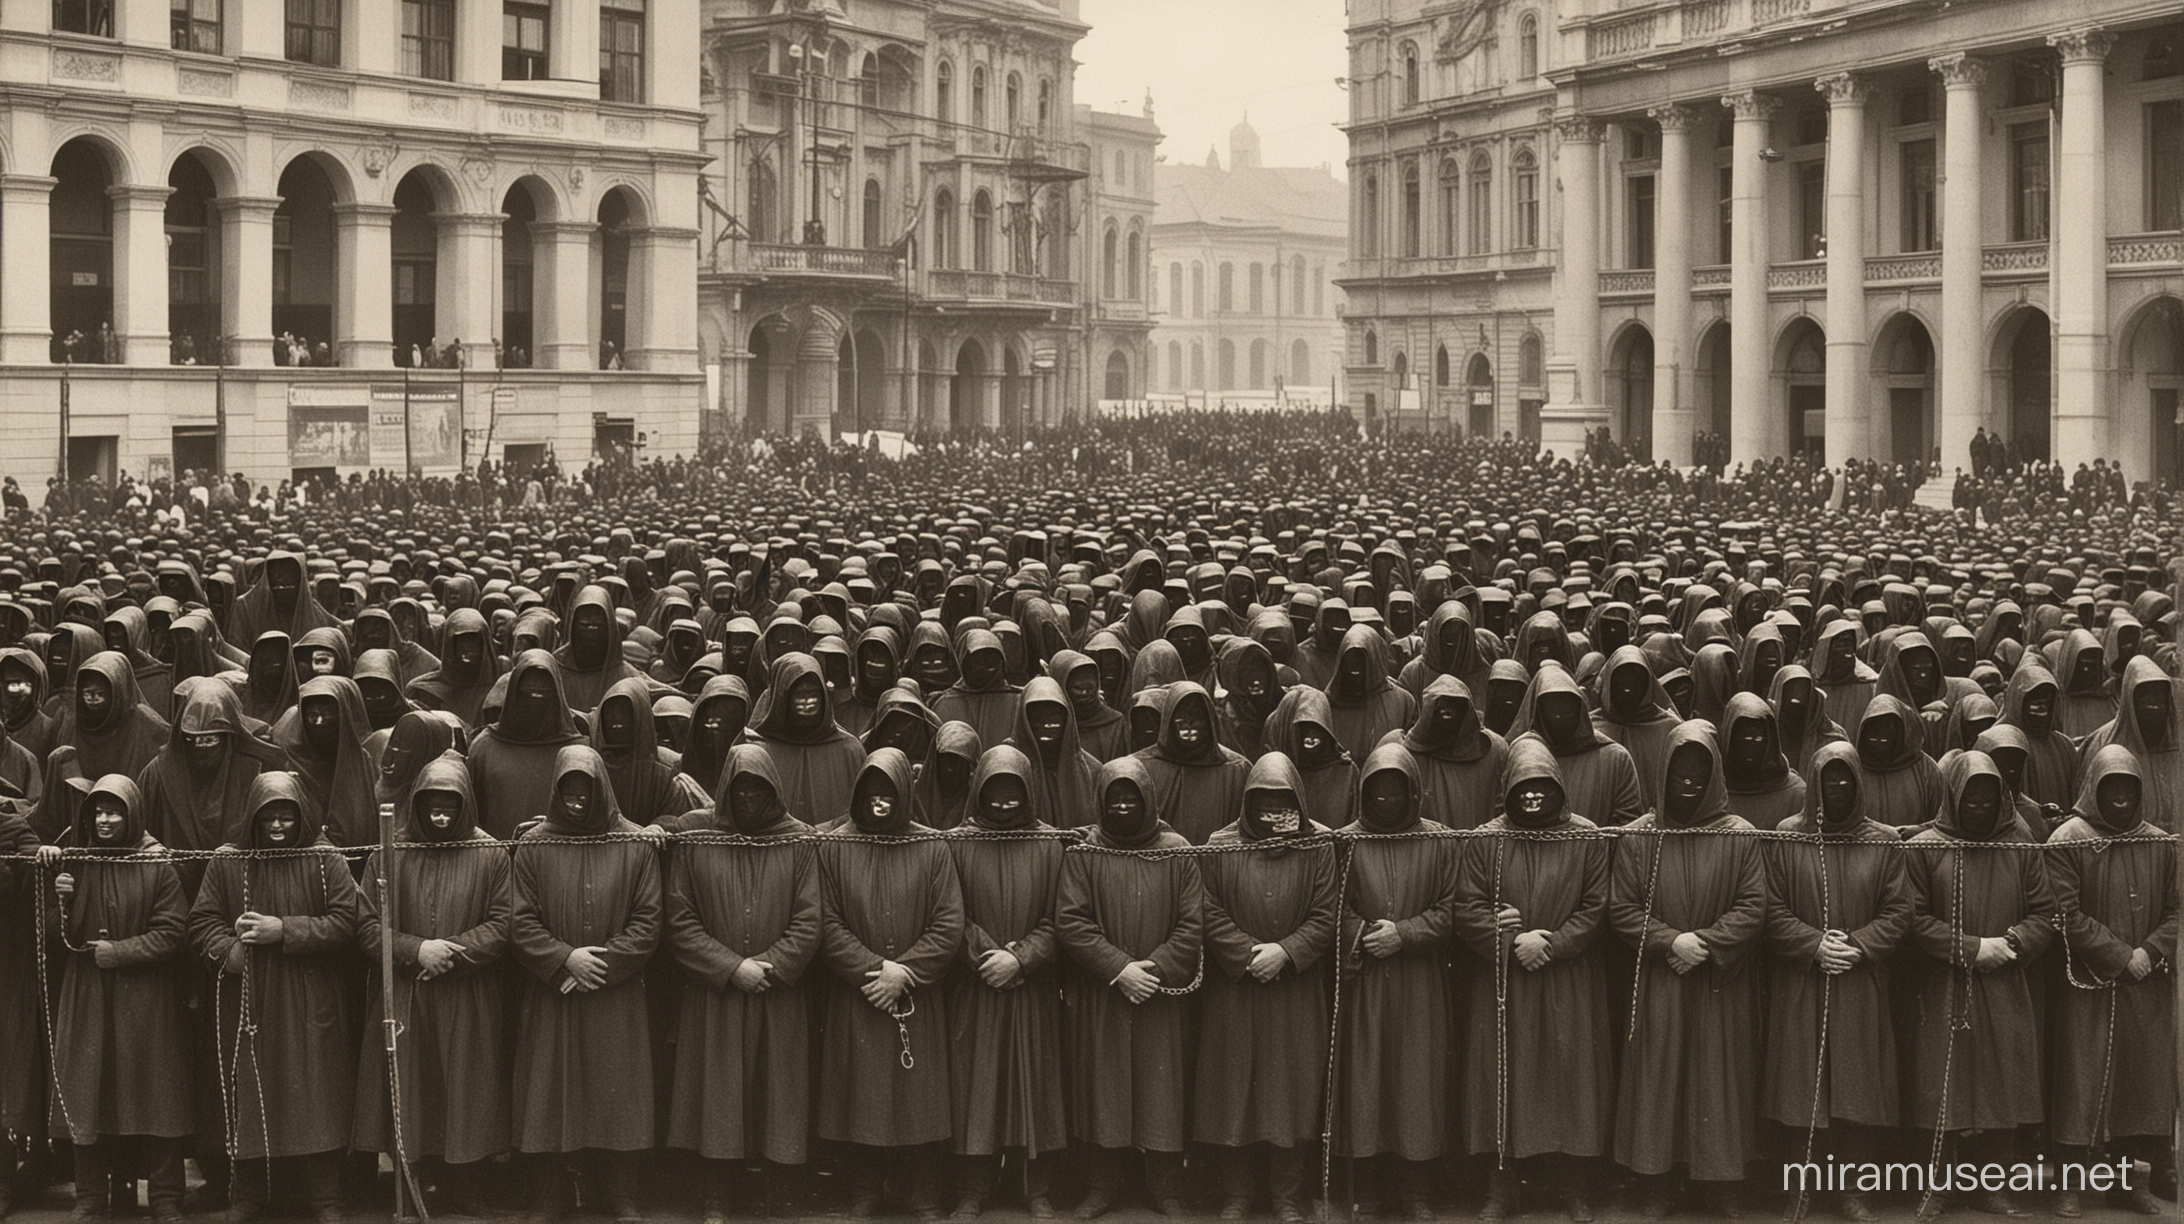 Romania 1910 Public Square Gathering under Soldiers Authority